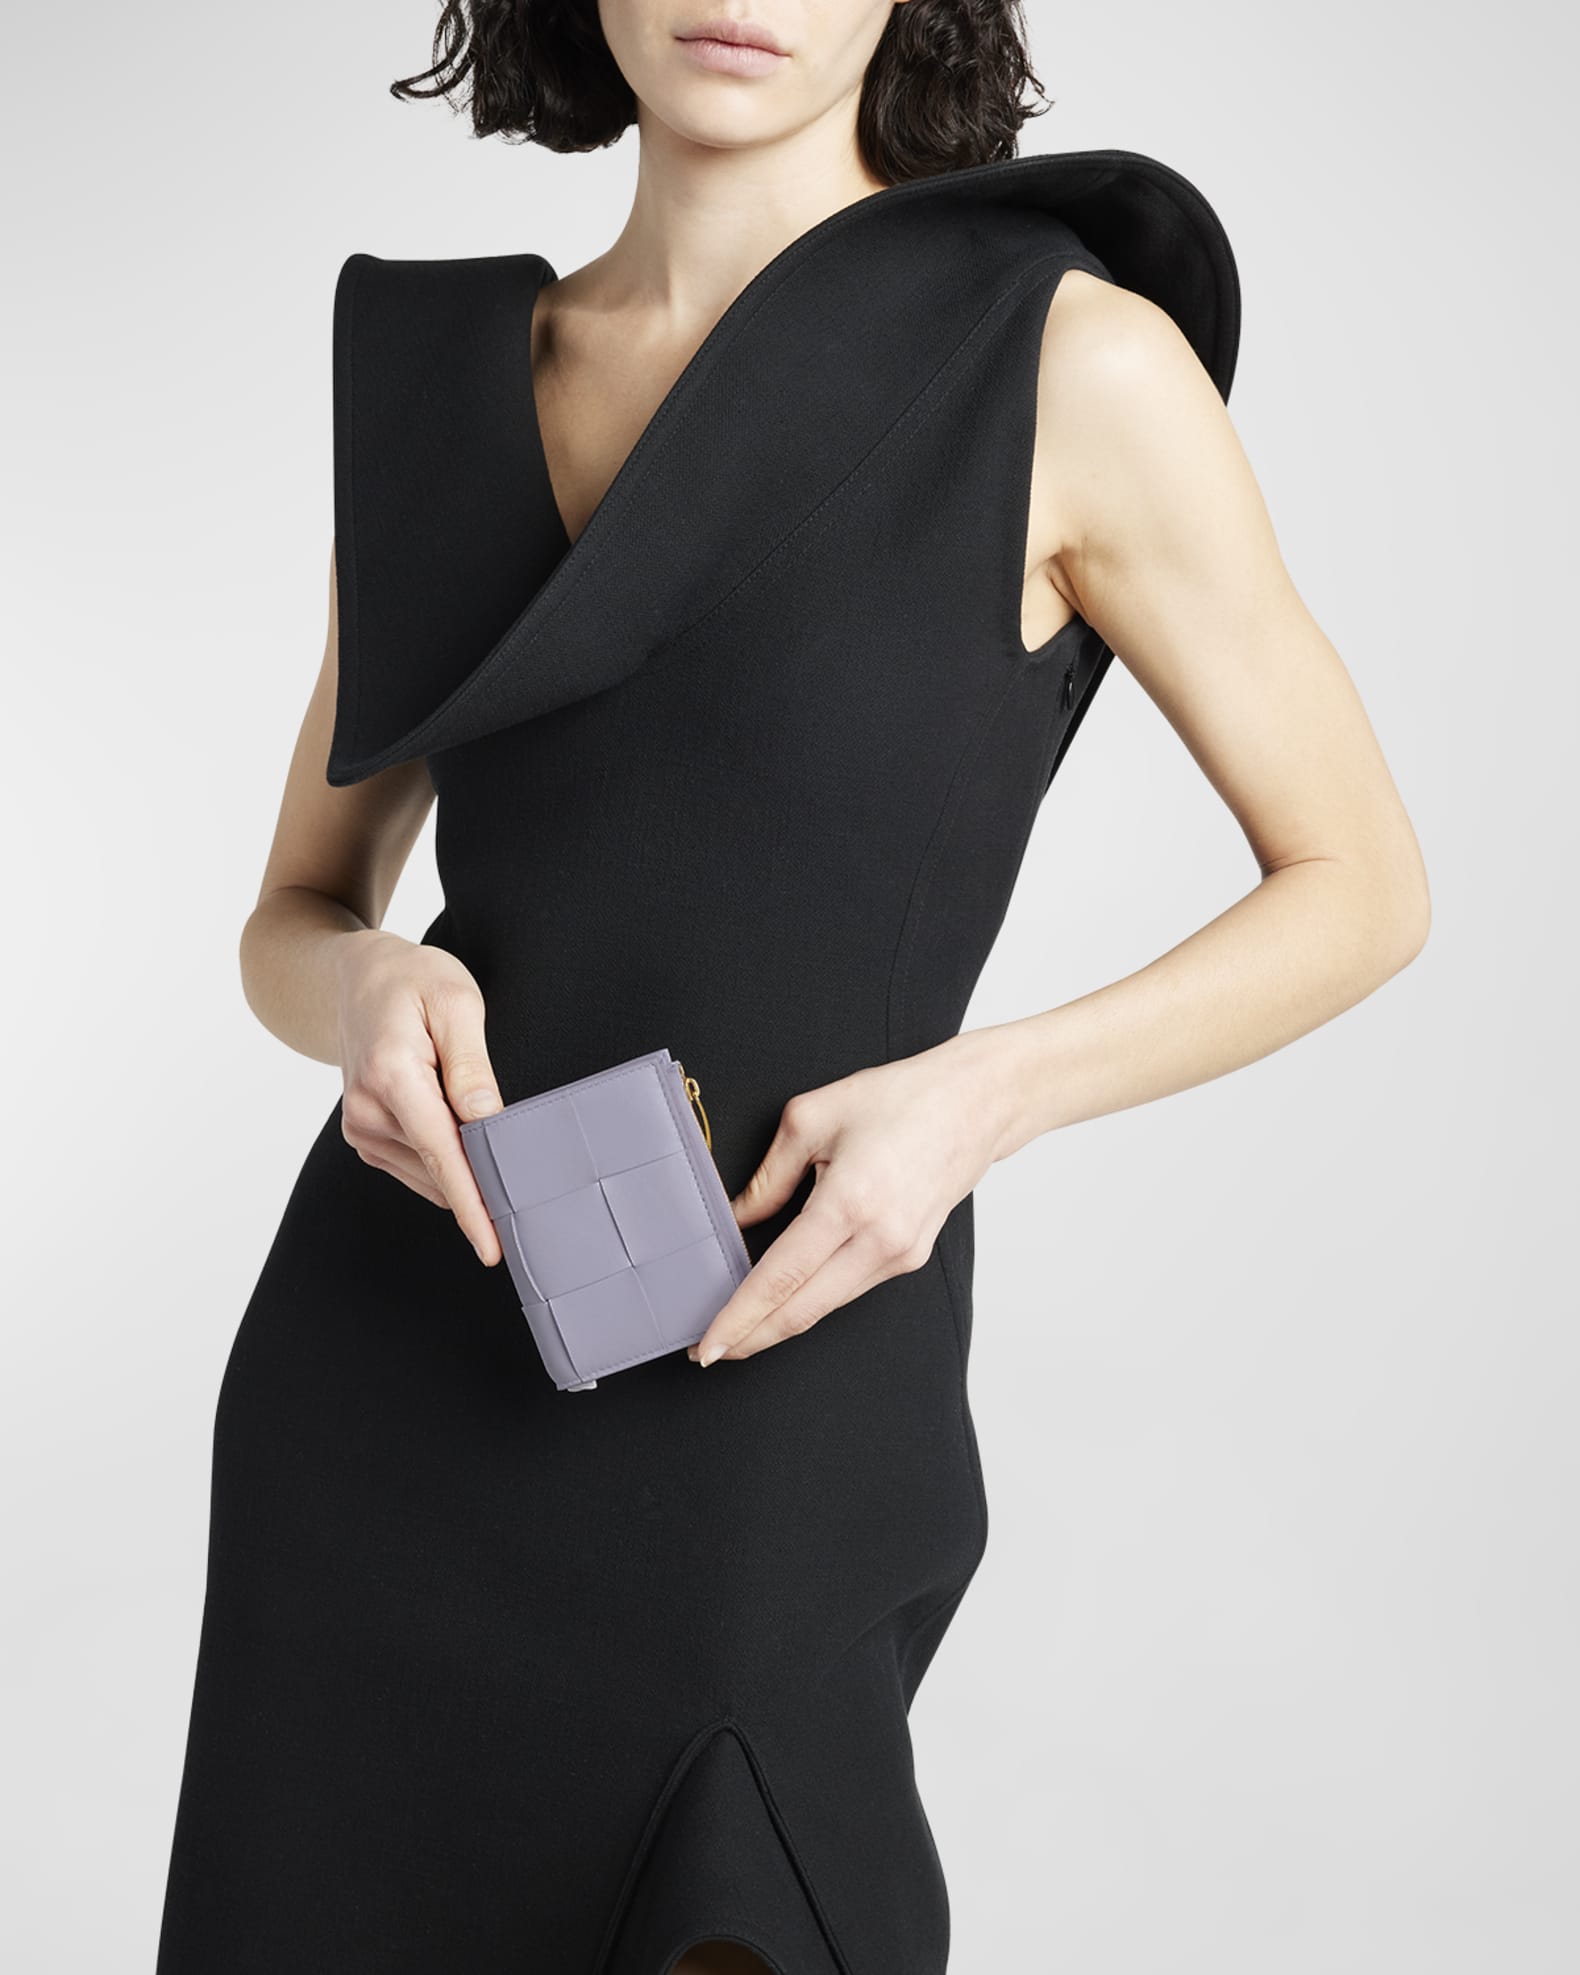 Bottega Veneta® Women's Small Bi-Fold Zip Wallet in Black. Shop online now.